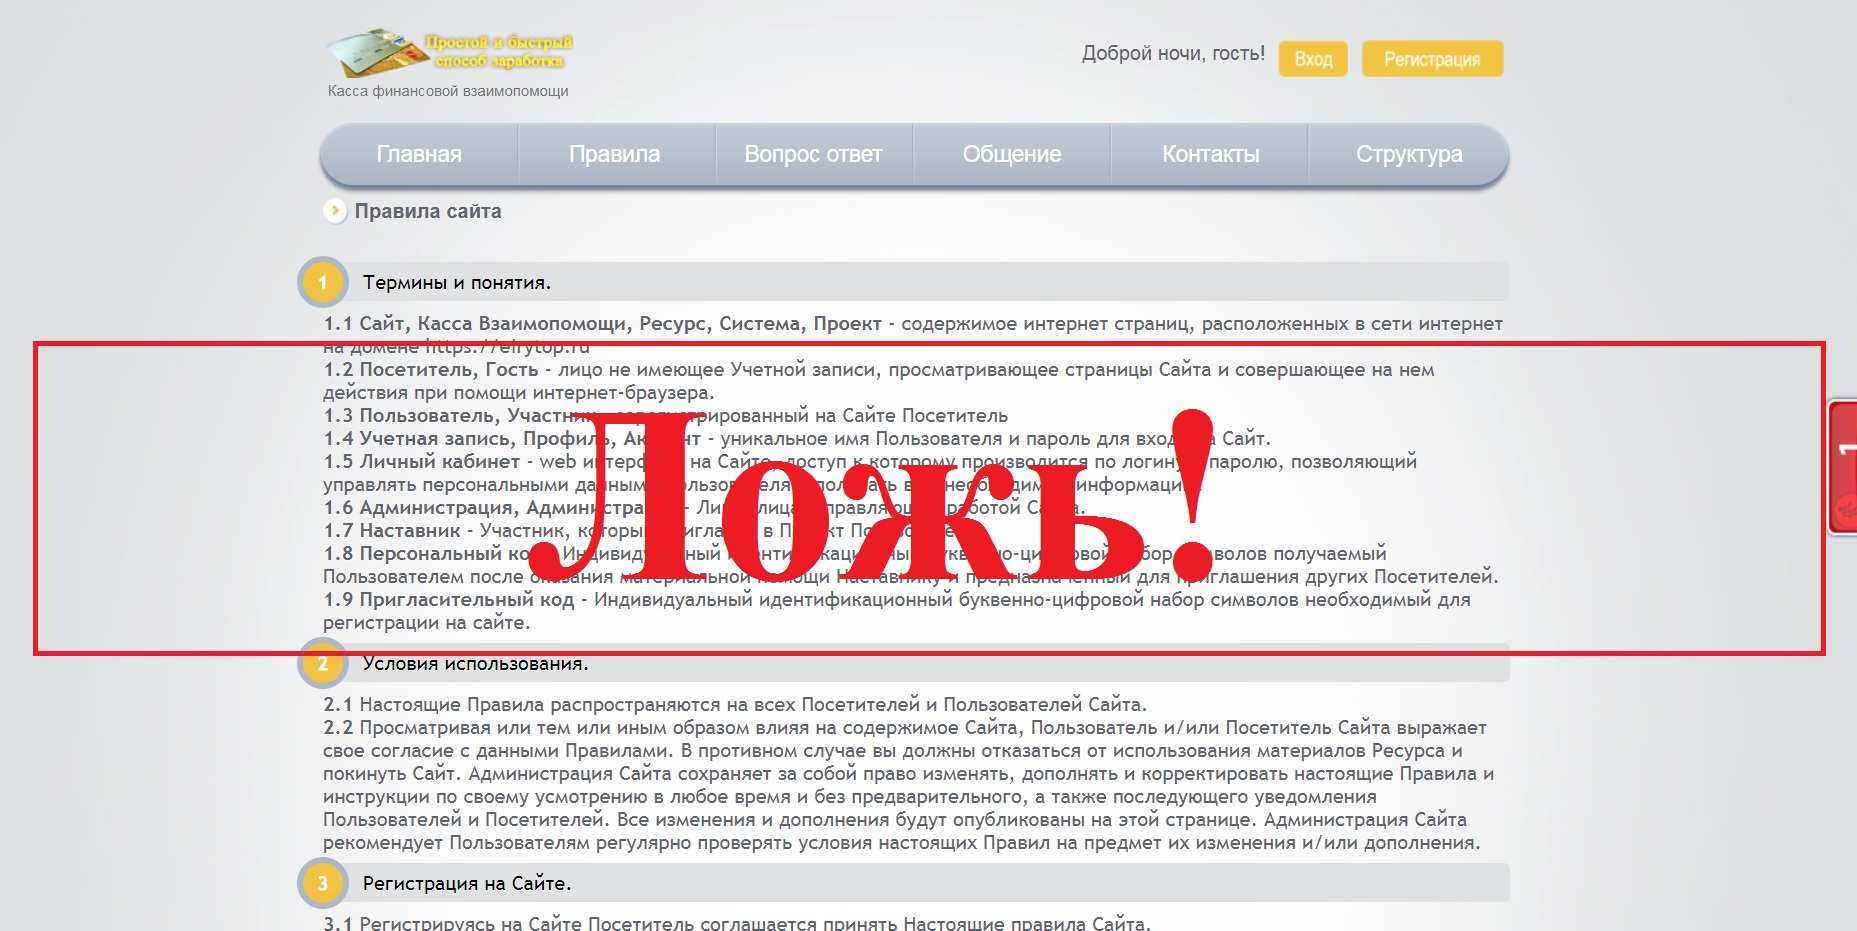 Lotnova.ru – отзывы о проекте